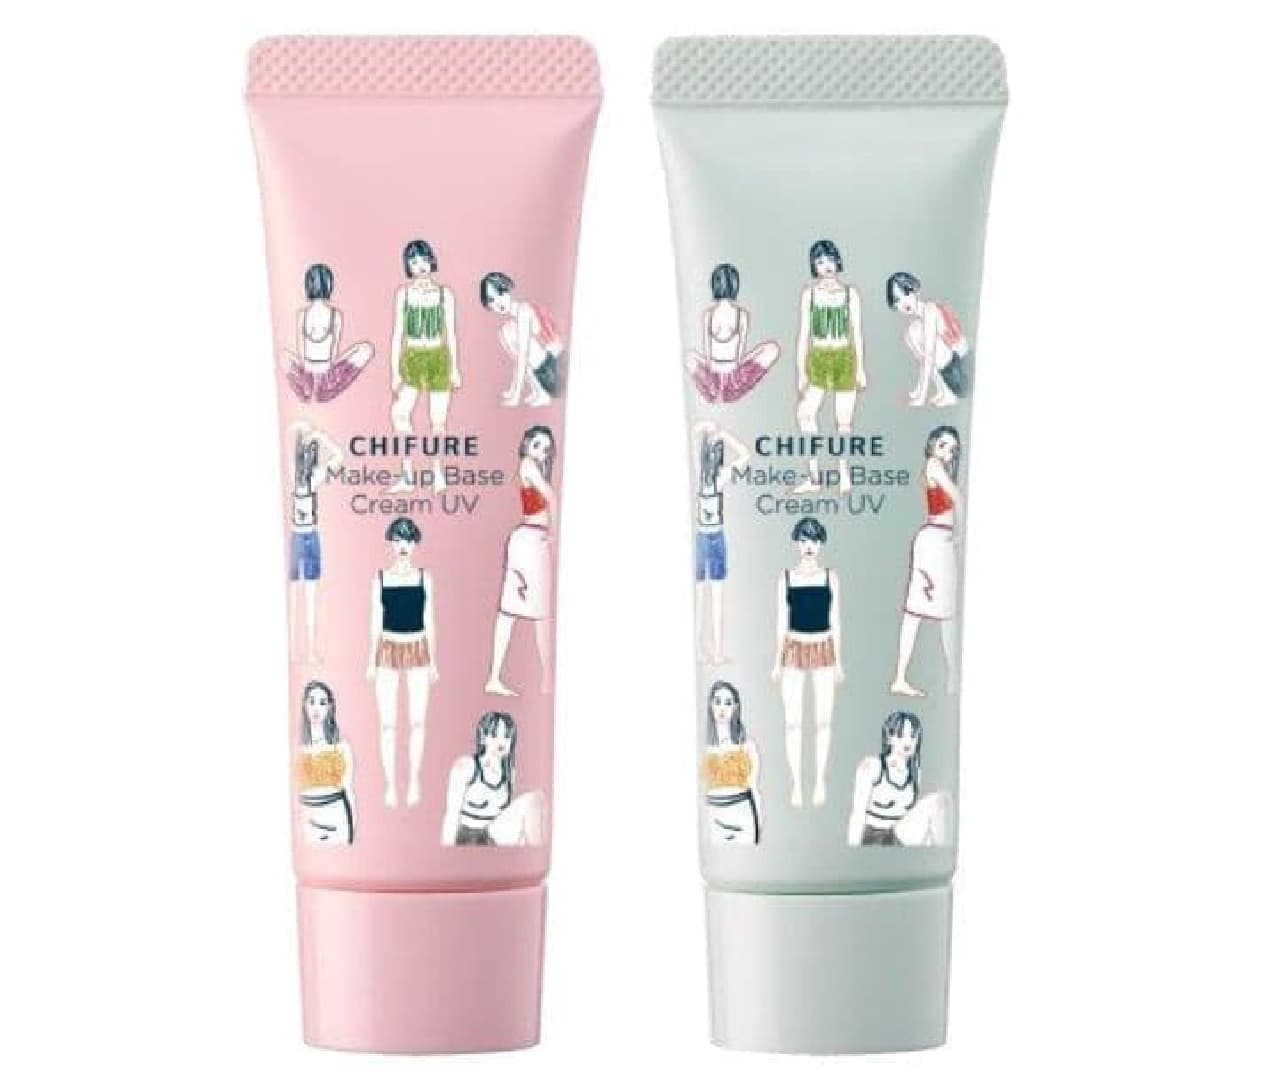 "Chifure Makeup Base Cream UV" designed by itabamoe